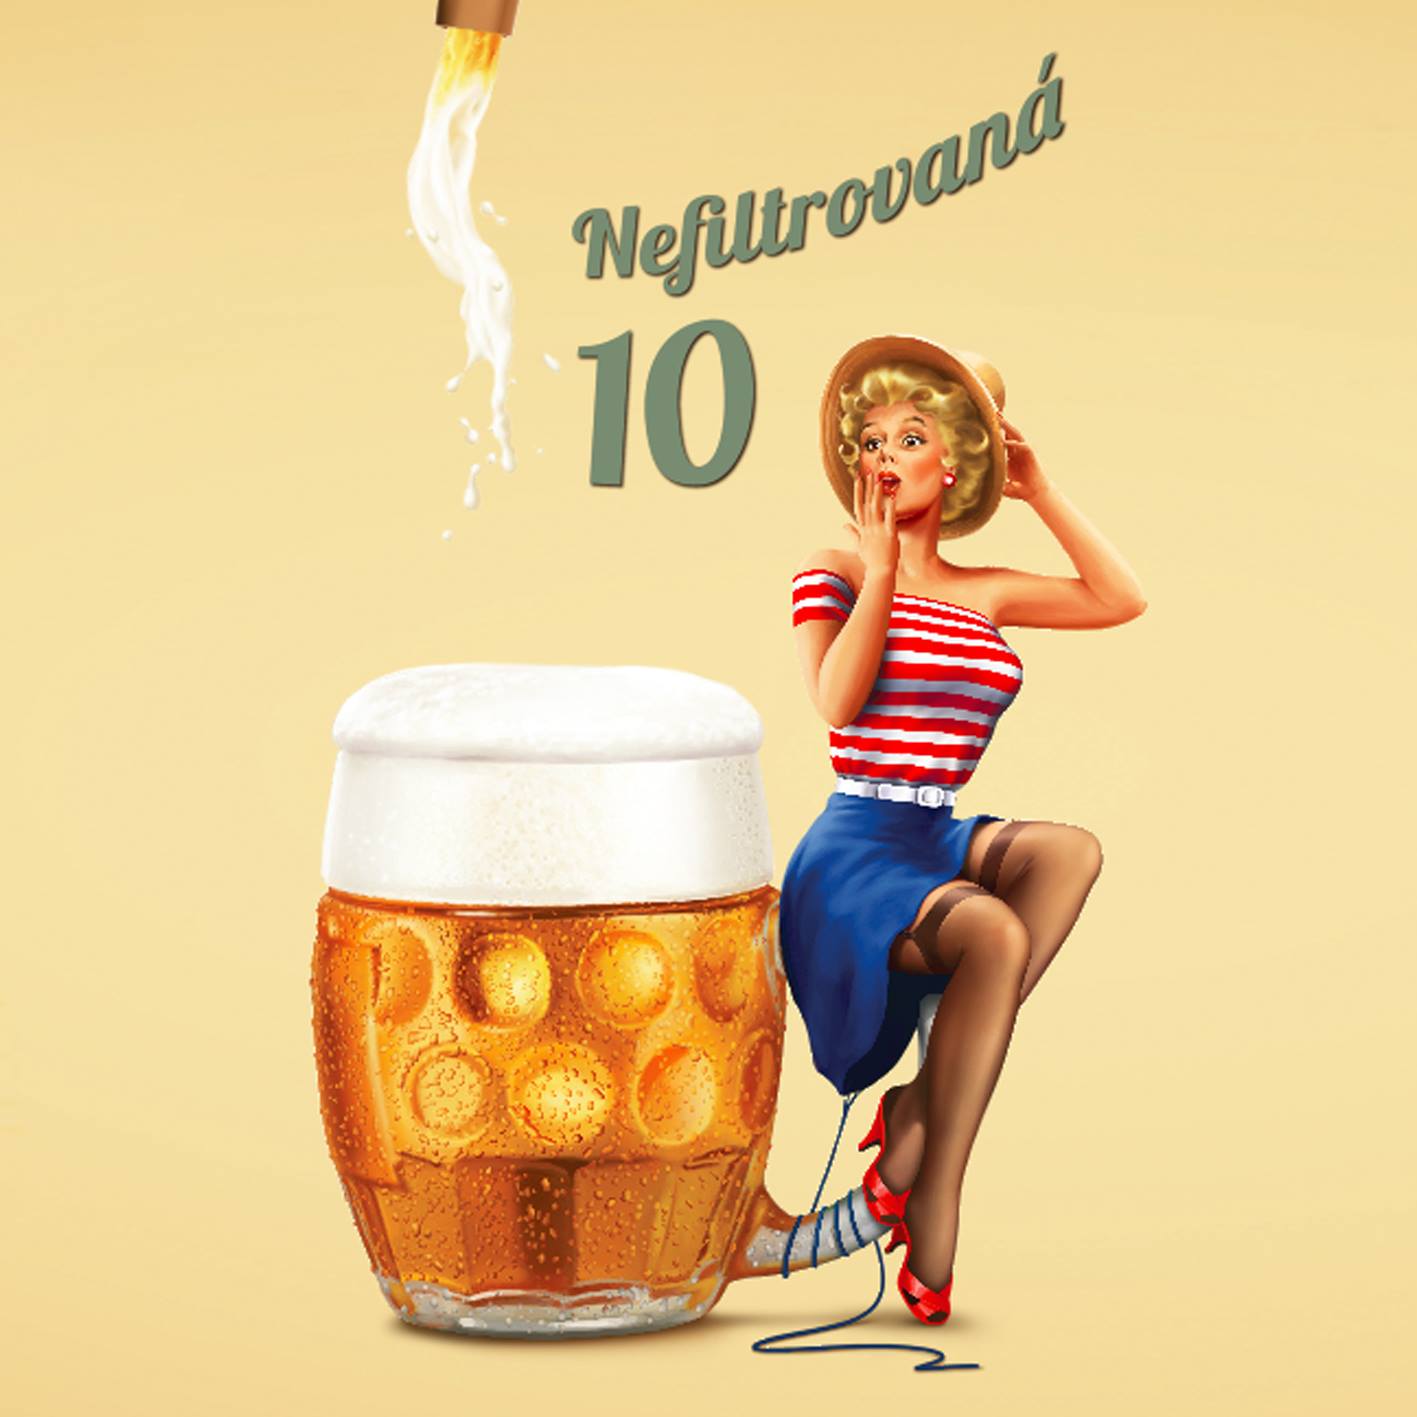 Girl beer poster - 🧡 Персонажи для рекламы и упаковки. on Behance.